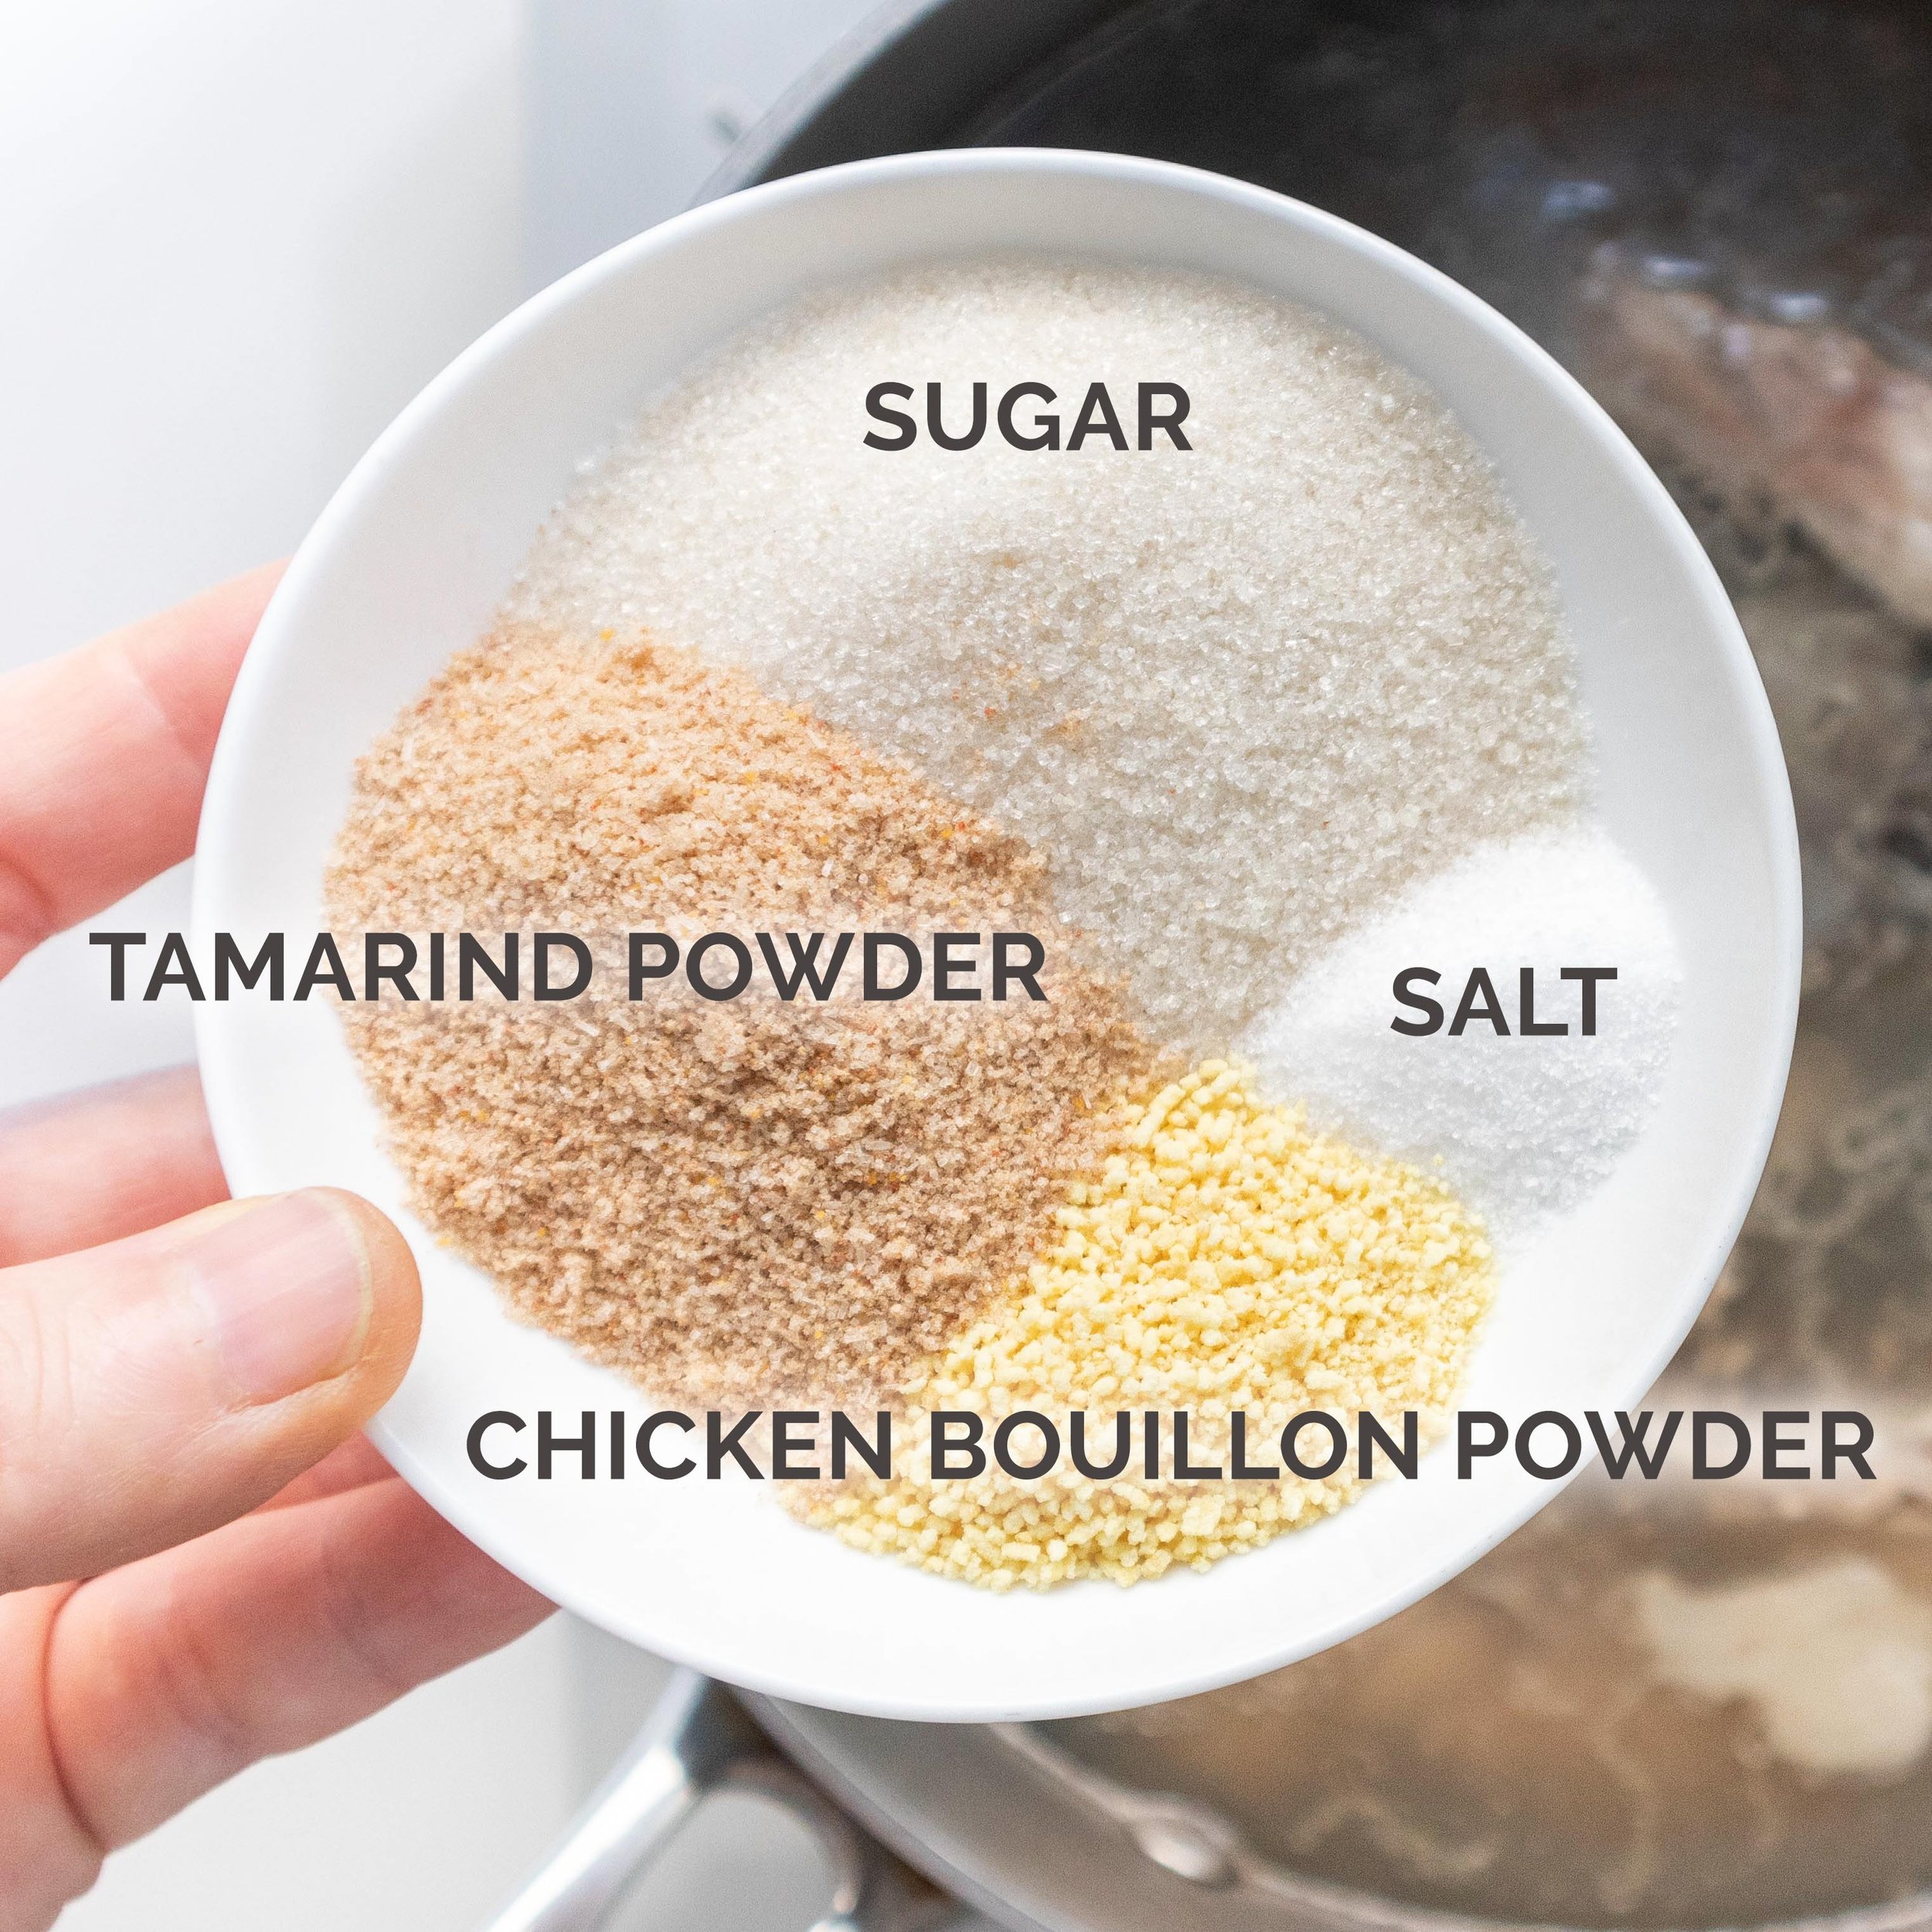 Seasonings for Canh Chua (sugar, salt, tamarind powder, and chicken bouillon powder)